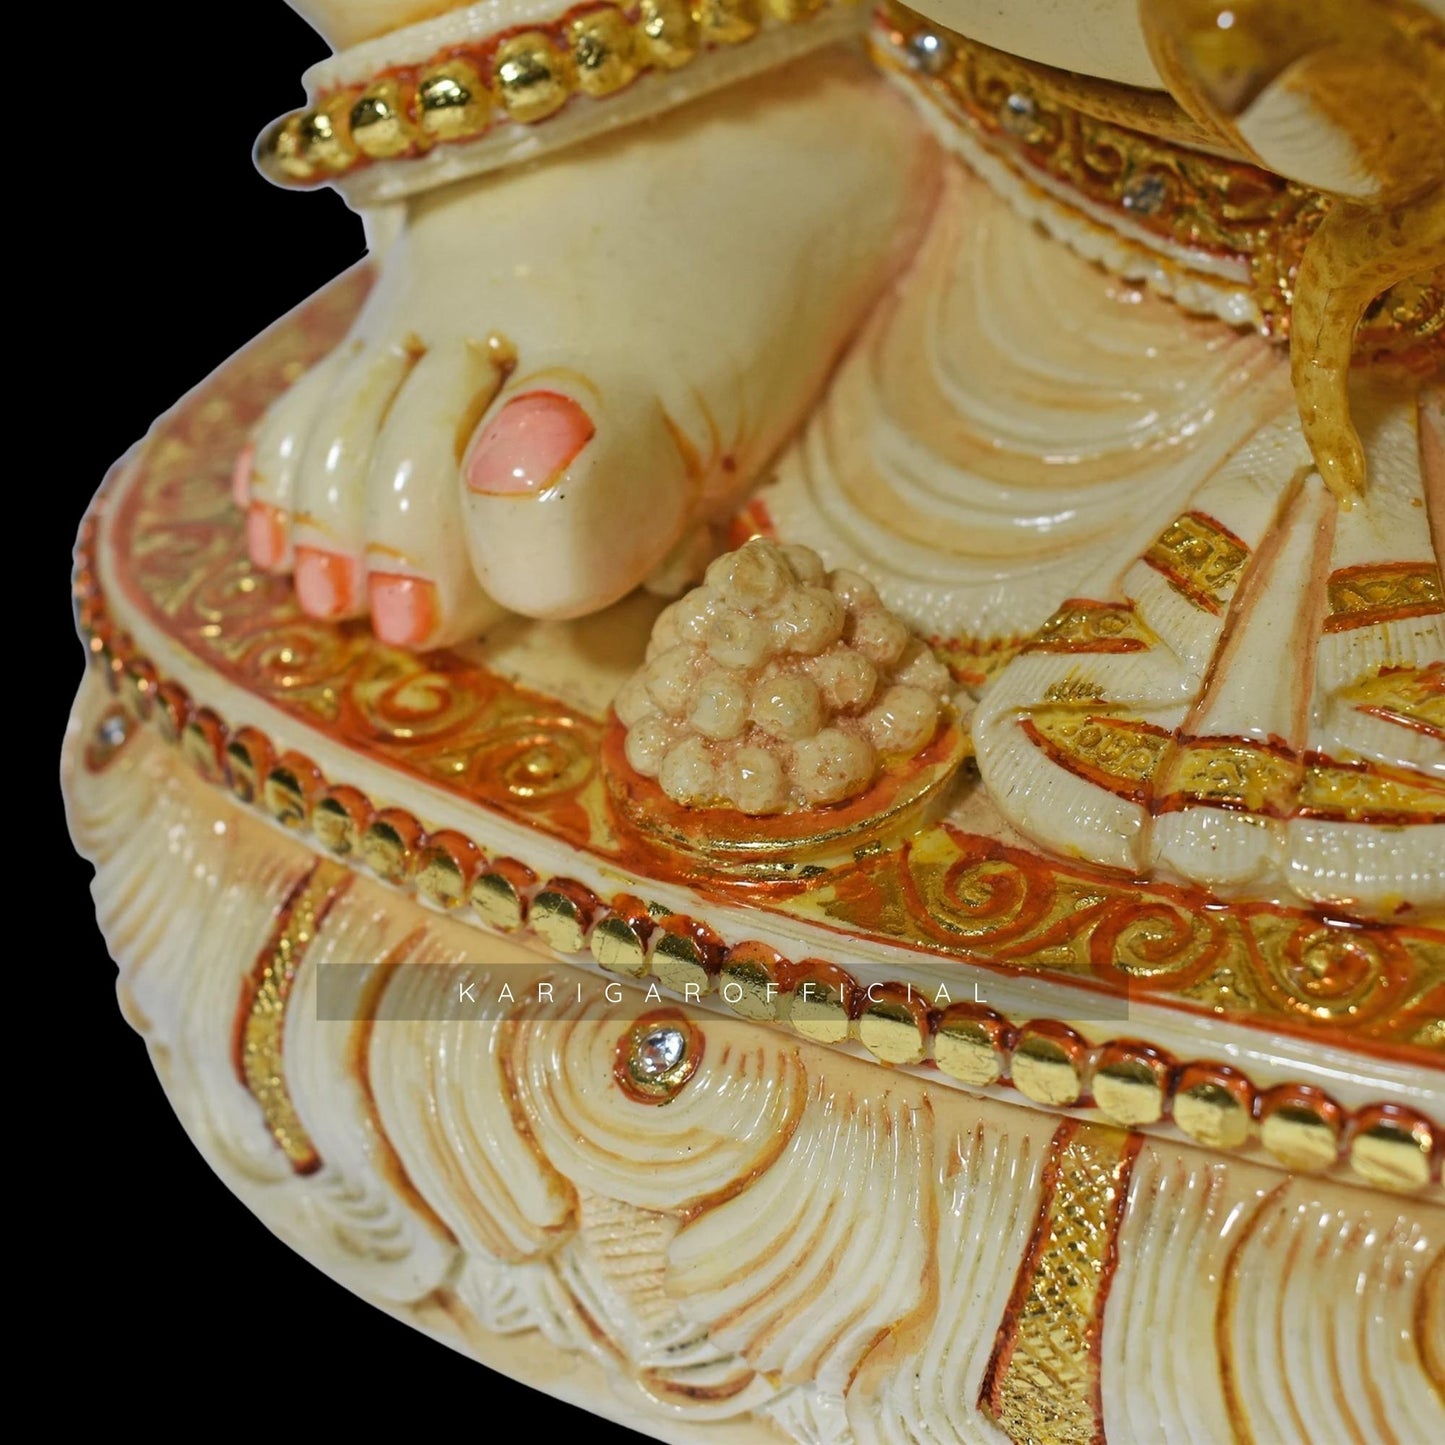 Ganesha Statue Murti, Large 21 inches Yellow Golden Ganpati, Hindu Religious Prosperity God, Good Luck Elephant, Marble Ganapati Idol, Vinayak Deity Home Temple Sculpture, Office Housewarming Gifts